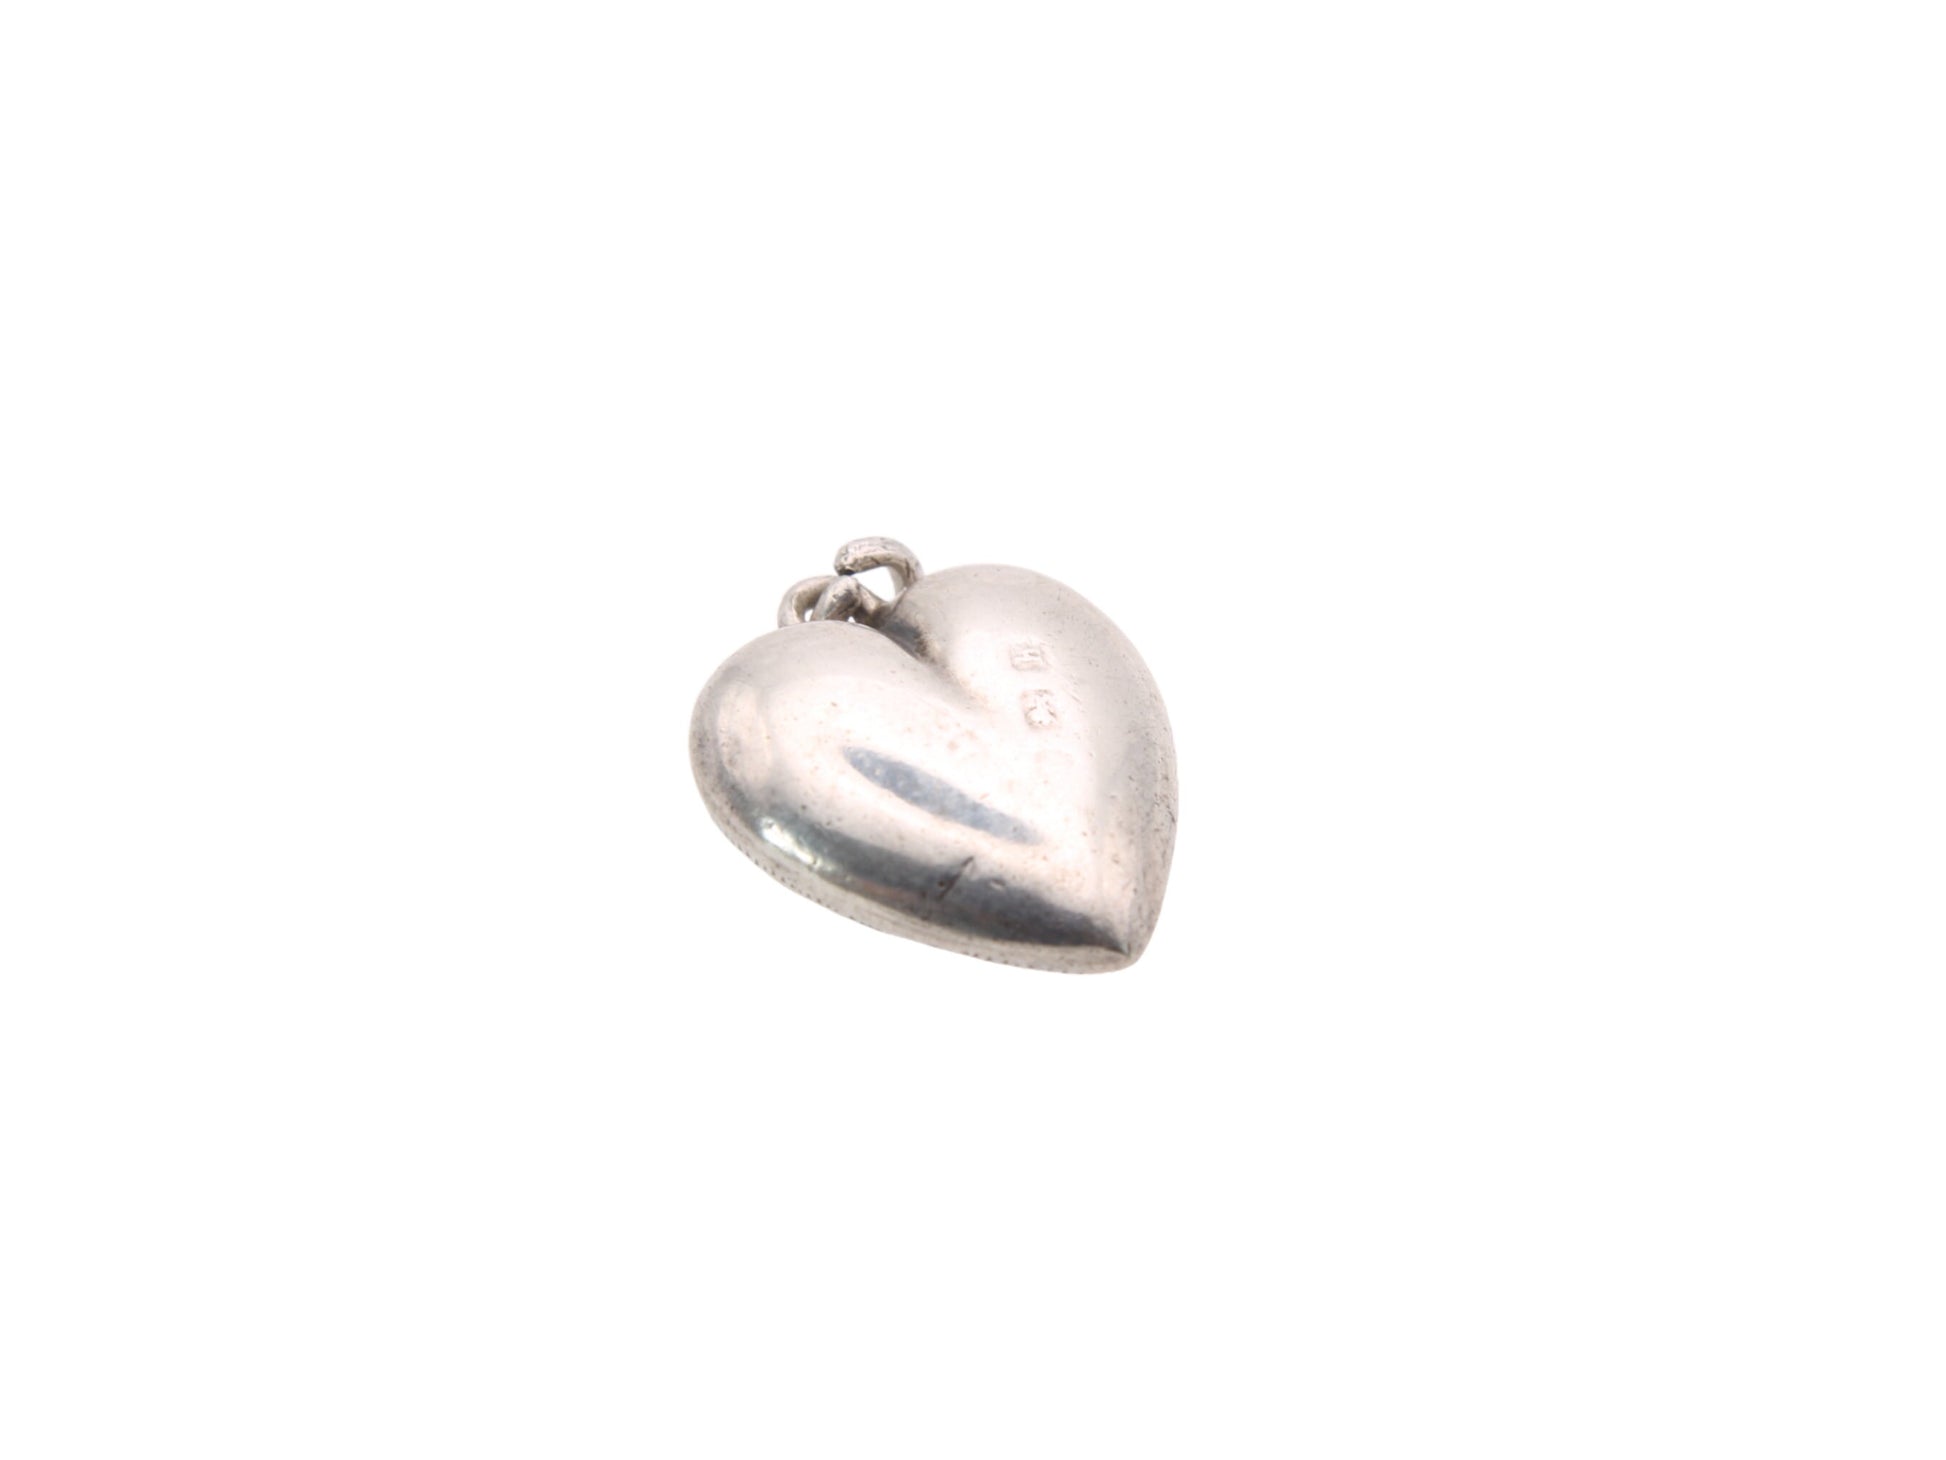 Antique-Sterling-Silver-Heart-Shamrock-Bloodstone-Pendant